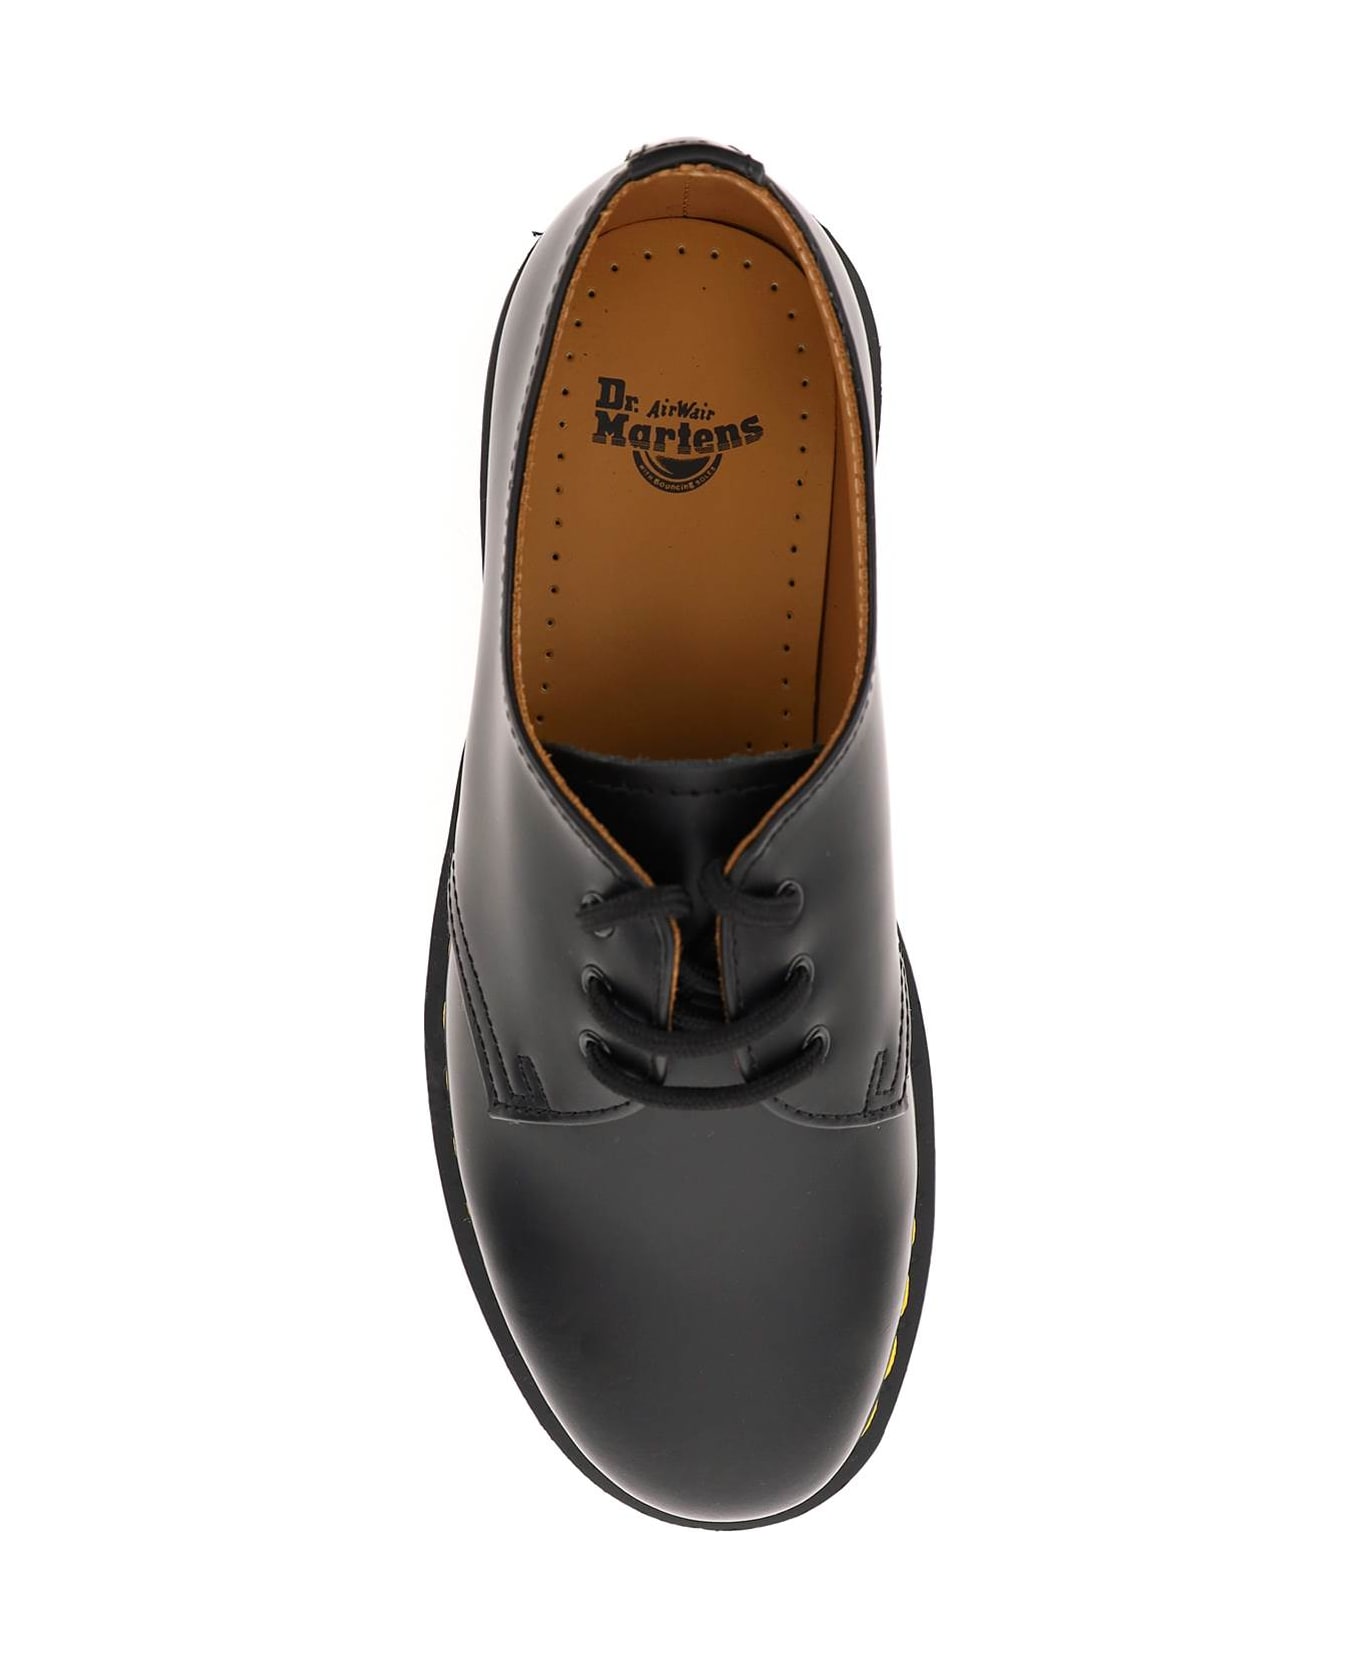 Dr. Martens 1461 Smooth Lace-up Shoes - Black フラットシューズ